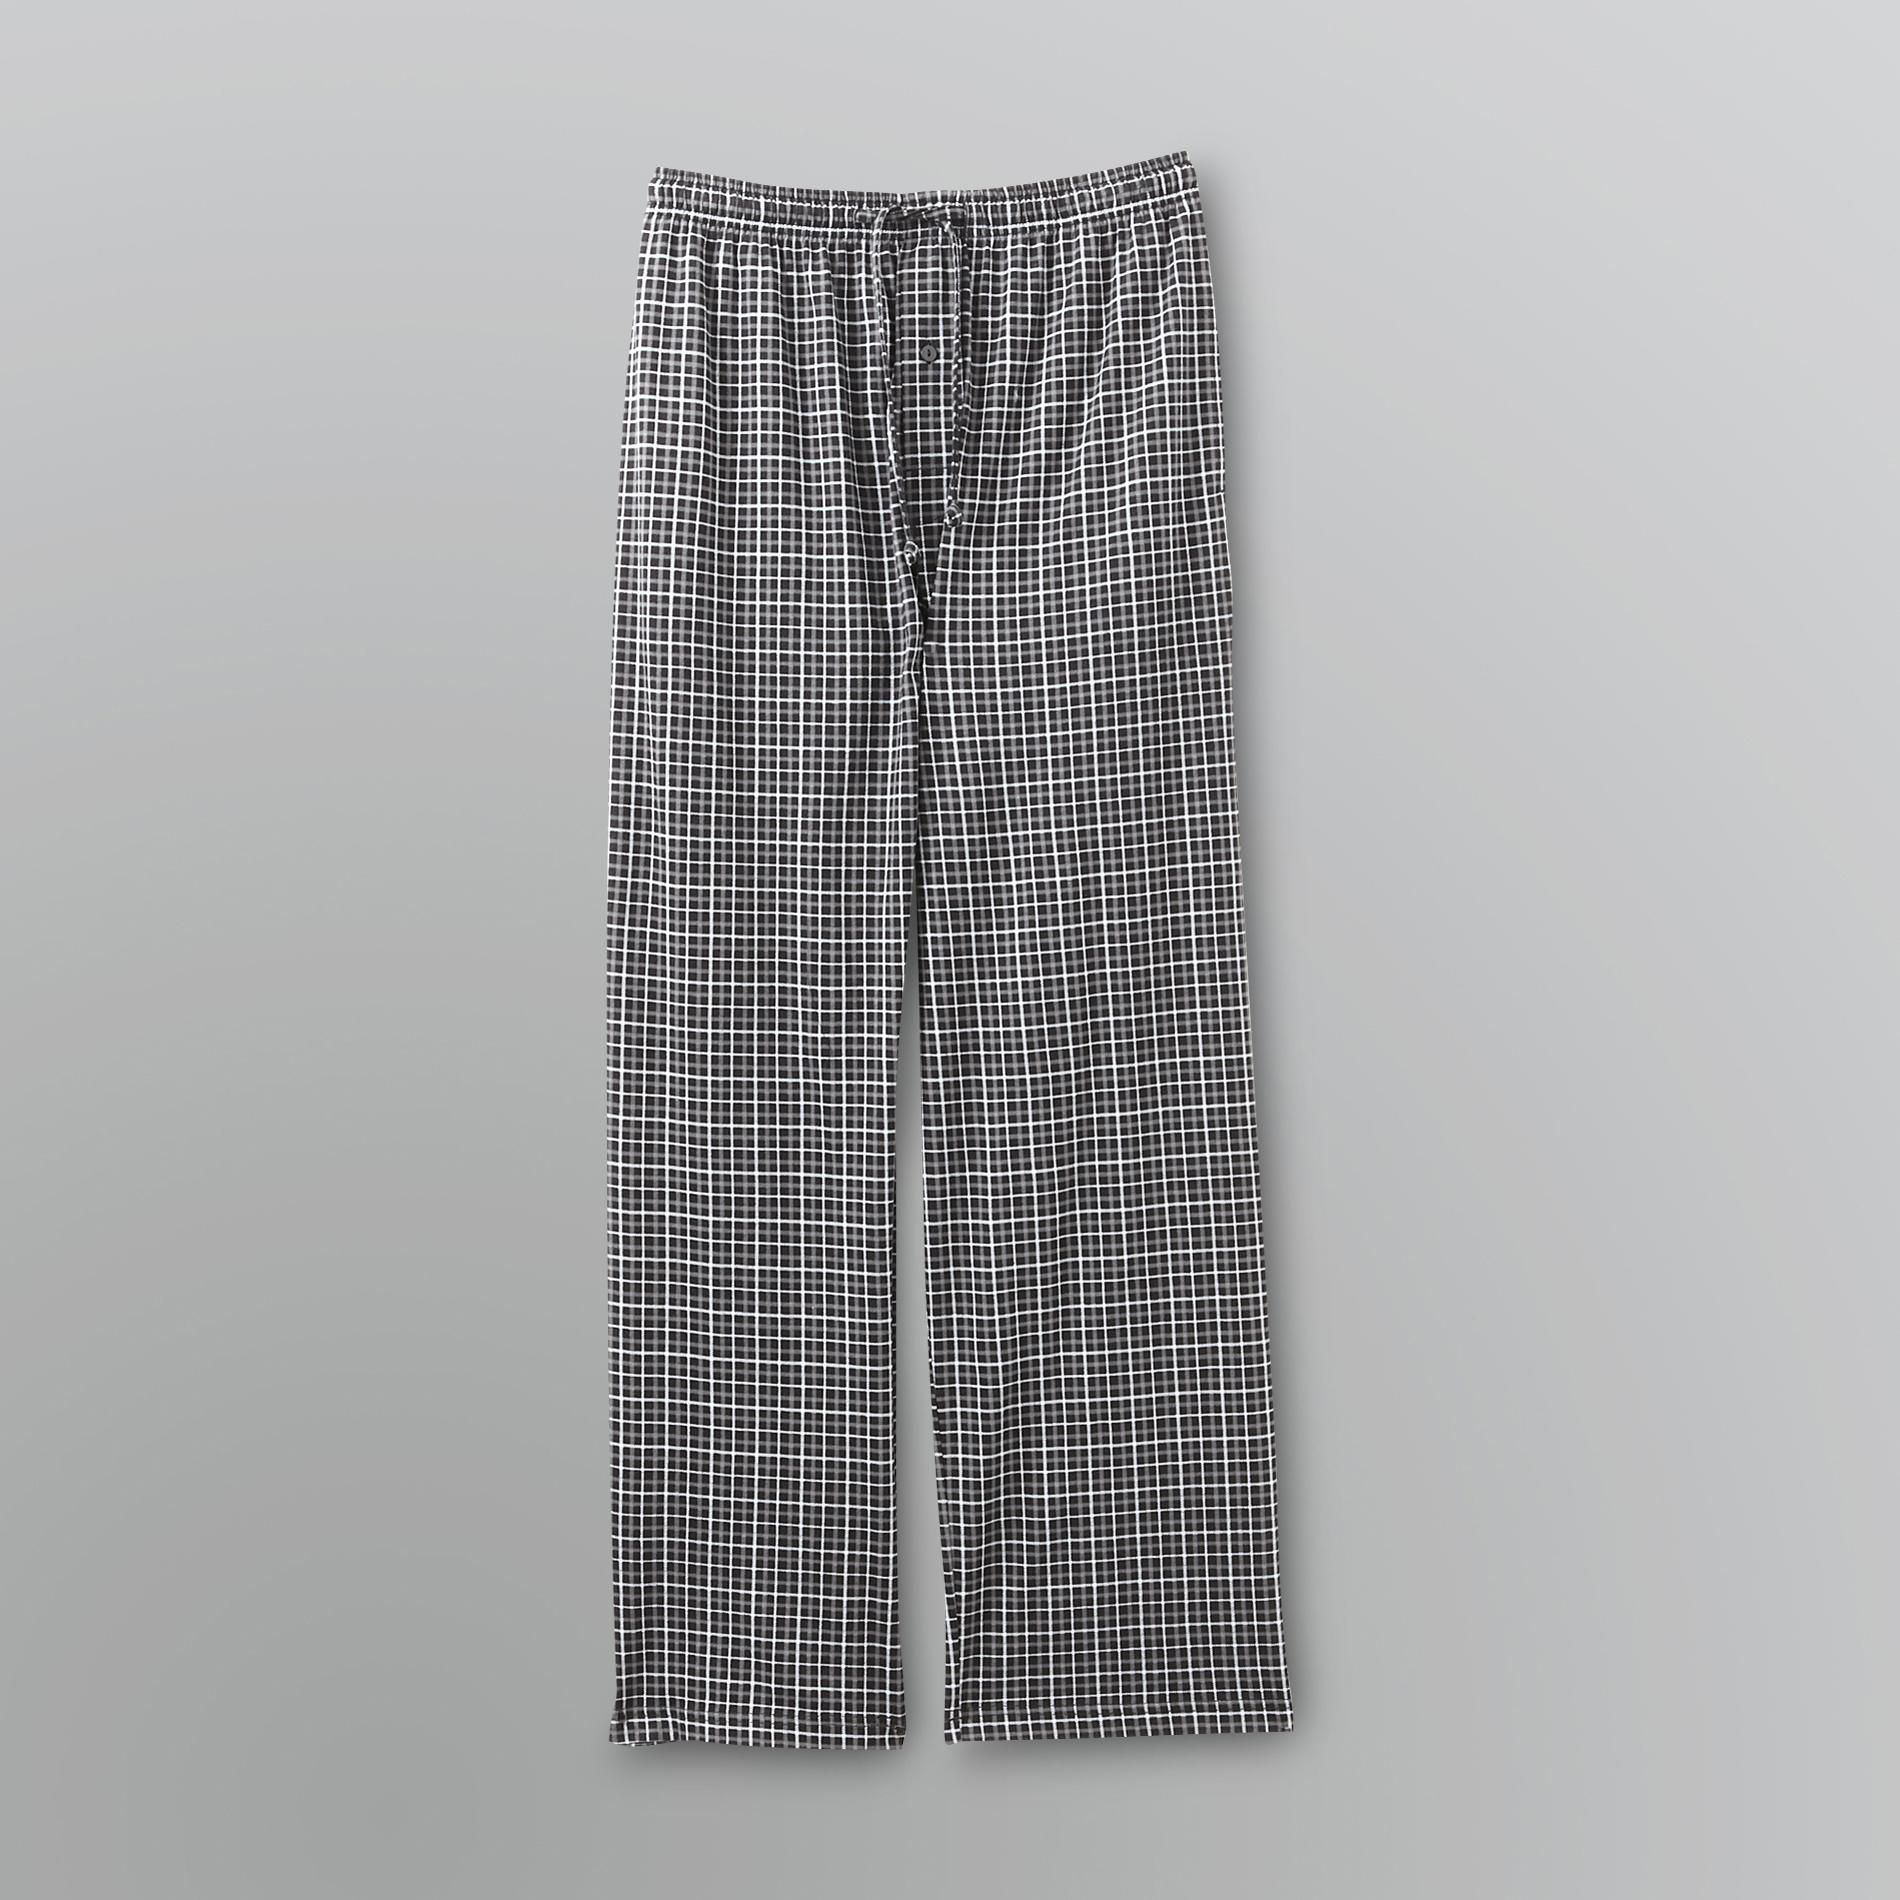 Covington Men's Plaid Pajama Pants